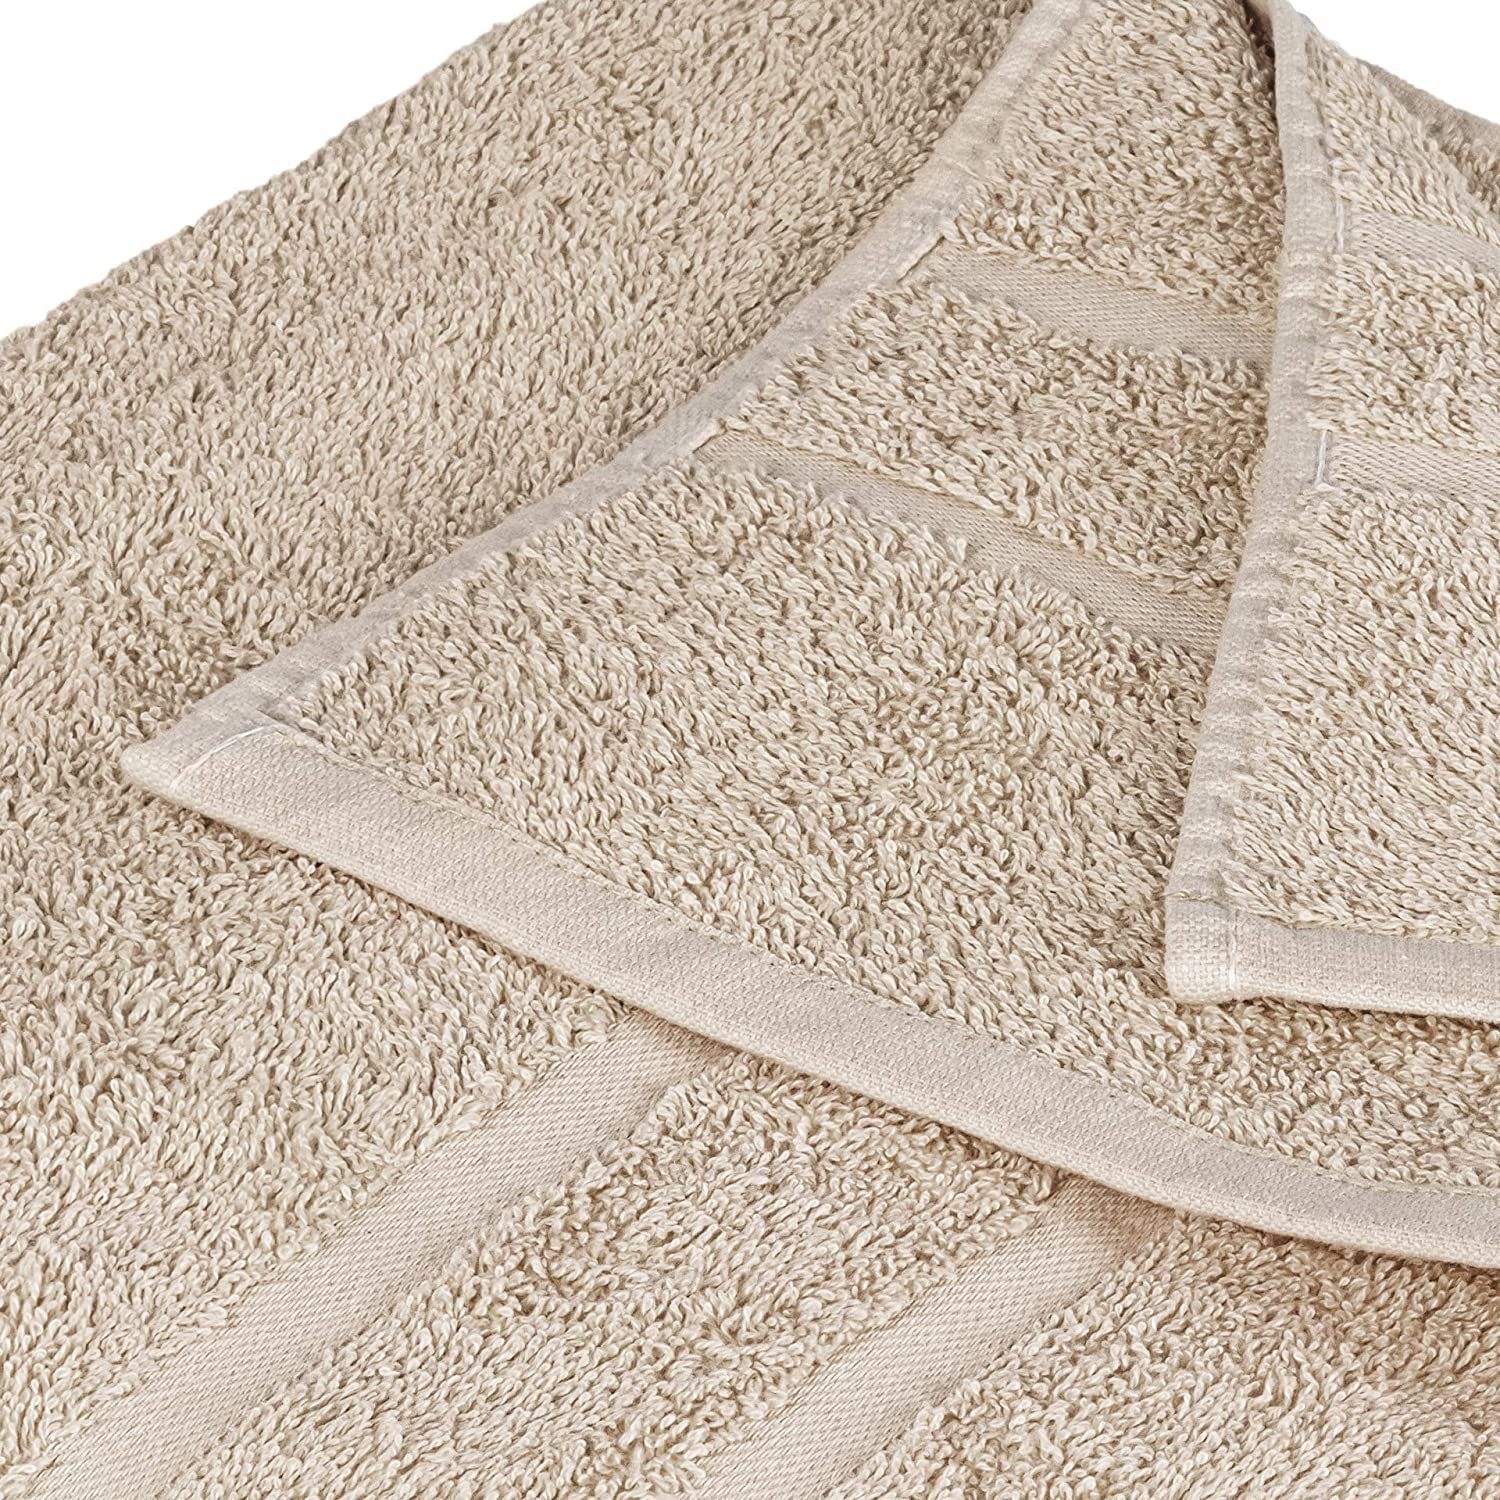 Handtücher 100% Duschtücher GSM Baumwolle Gästehandtücher Saunatücher zur Wahl Handtuch in 500 Badetücher Sand StickandShine